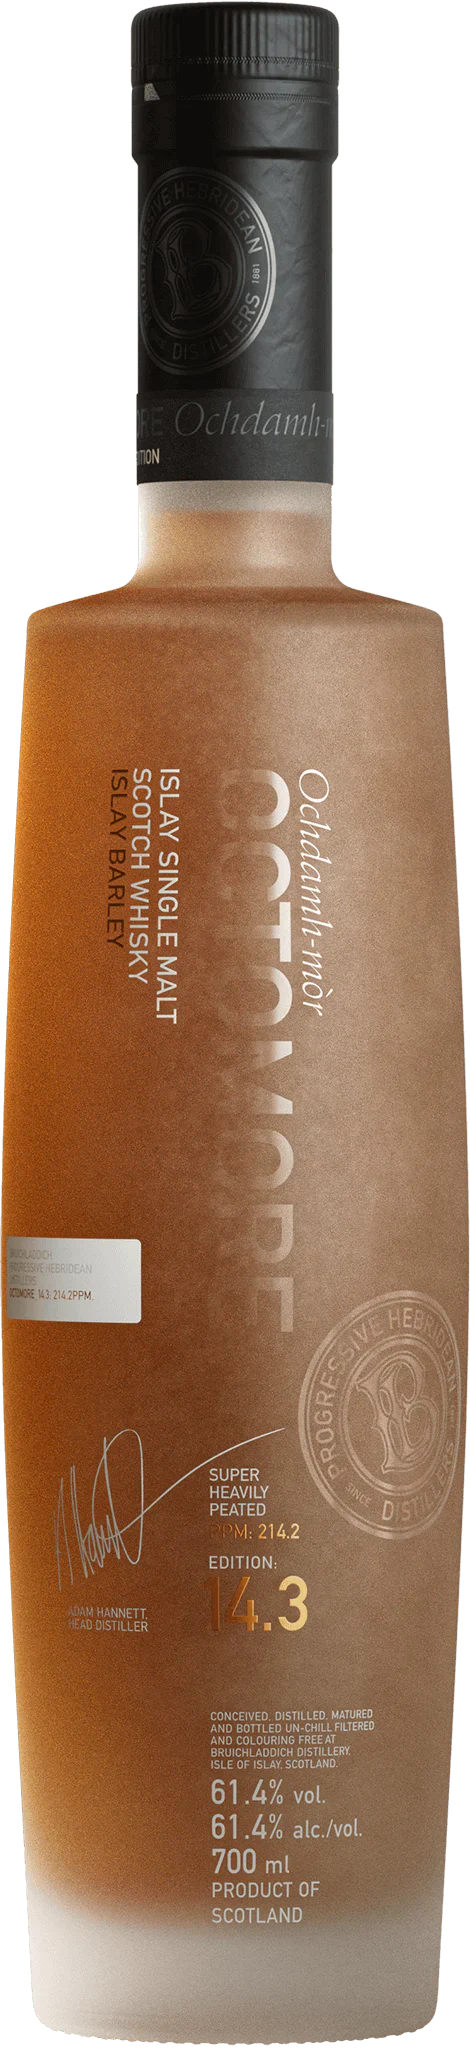 Bruichladdich Islay Single Malt Scotch Whisky Octomore Edition 14.3 